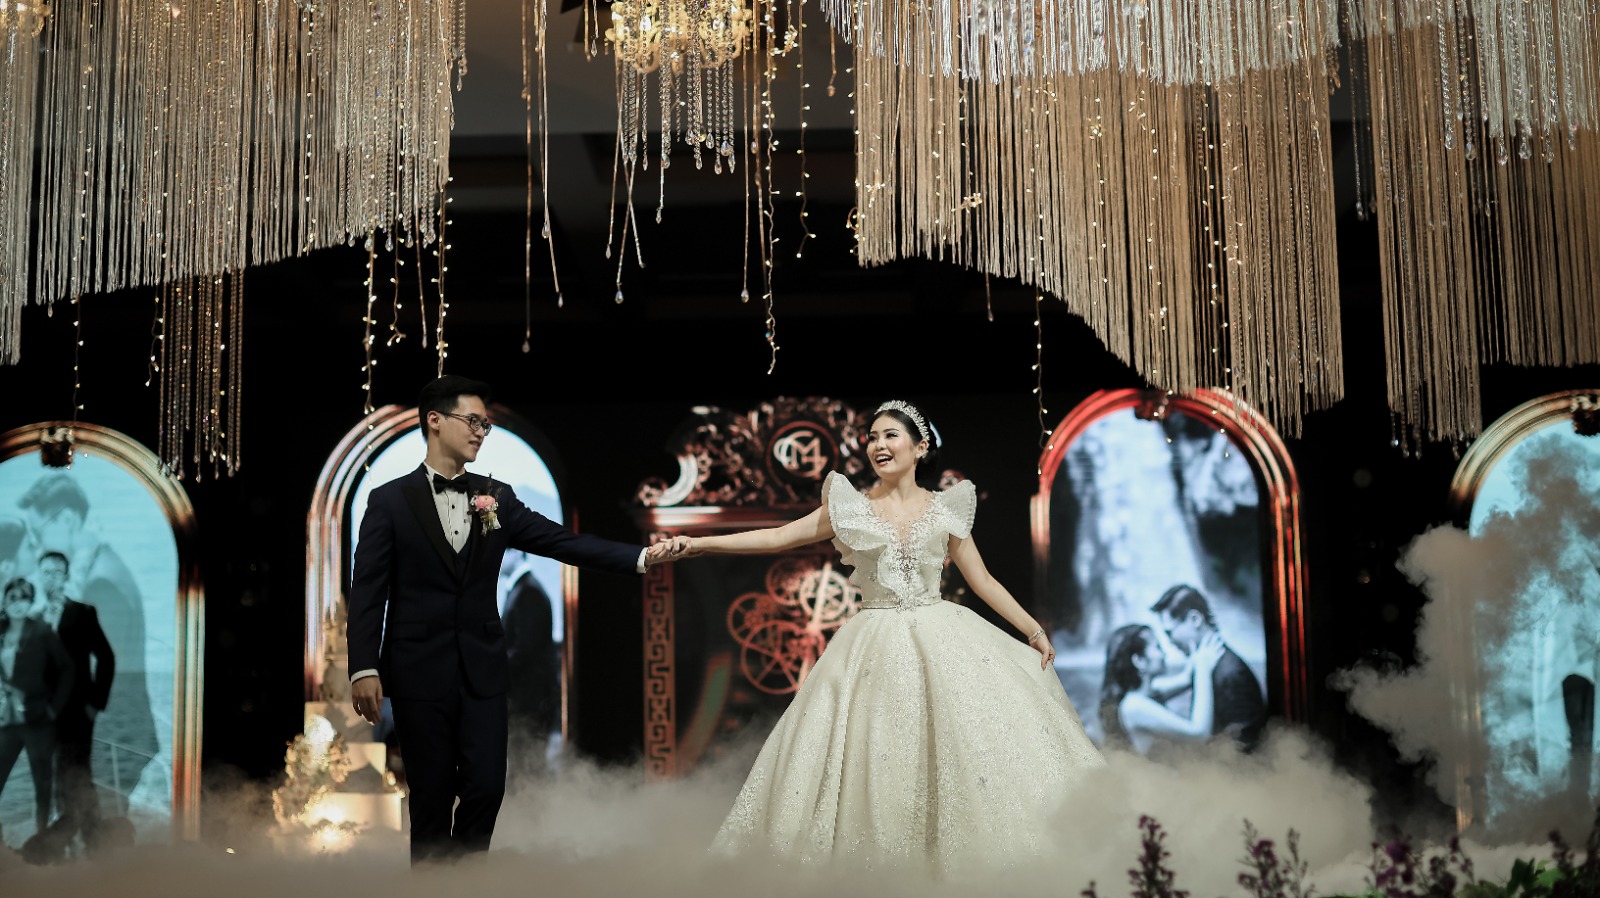 Ramaikan PIM Wedding Expo, Harper Hotel Palembang Tawarkan Banyak Promo untuk Calon Pengantin 